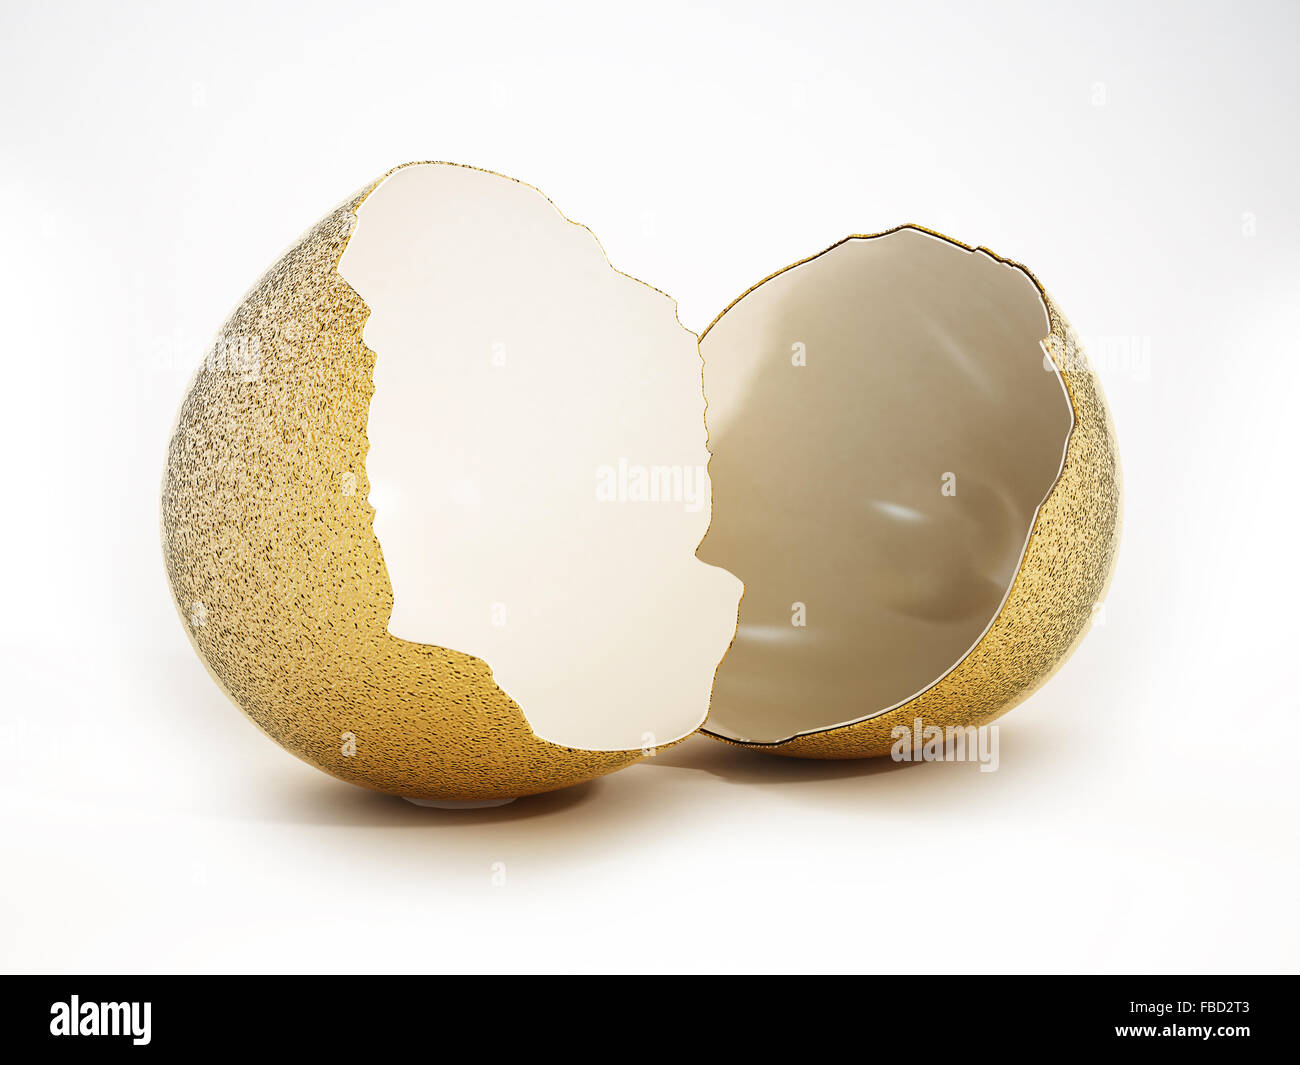 Huevos rotos con dos piezas de shell aislado sobre fondo blanco. Foto de stock